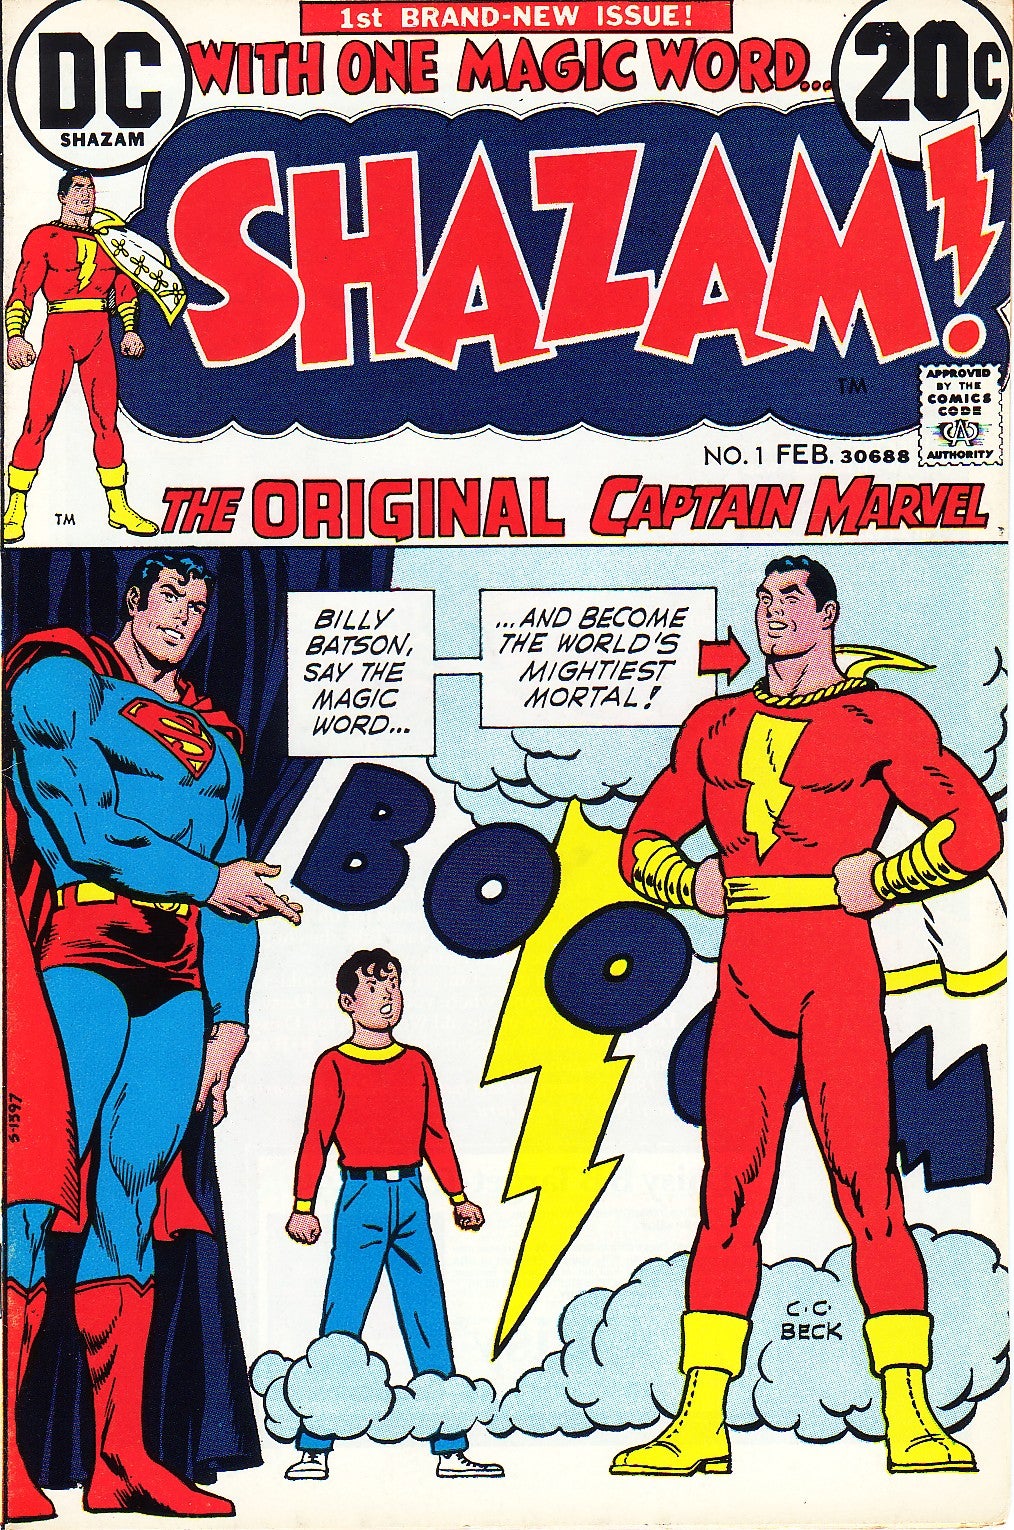 Cover of Shazam featuring Shazam and Superman